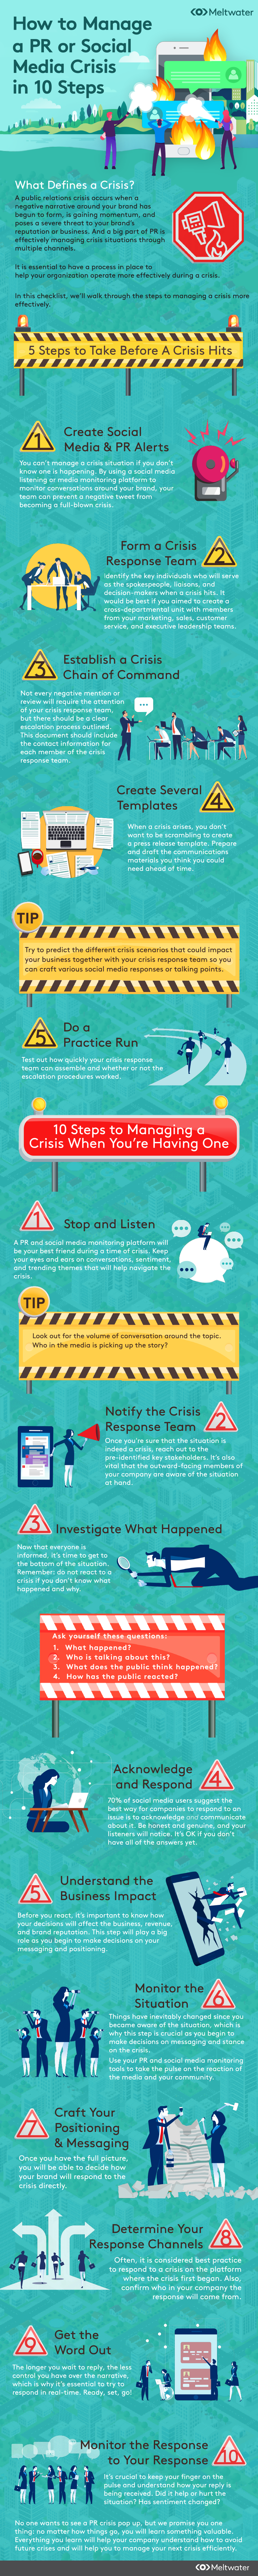 PR or Social Media Crisis Infographic